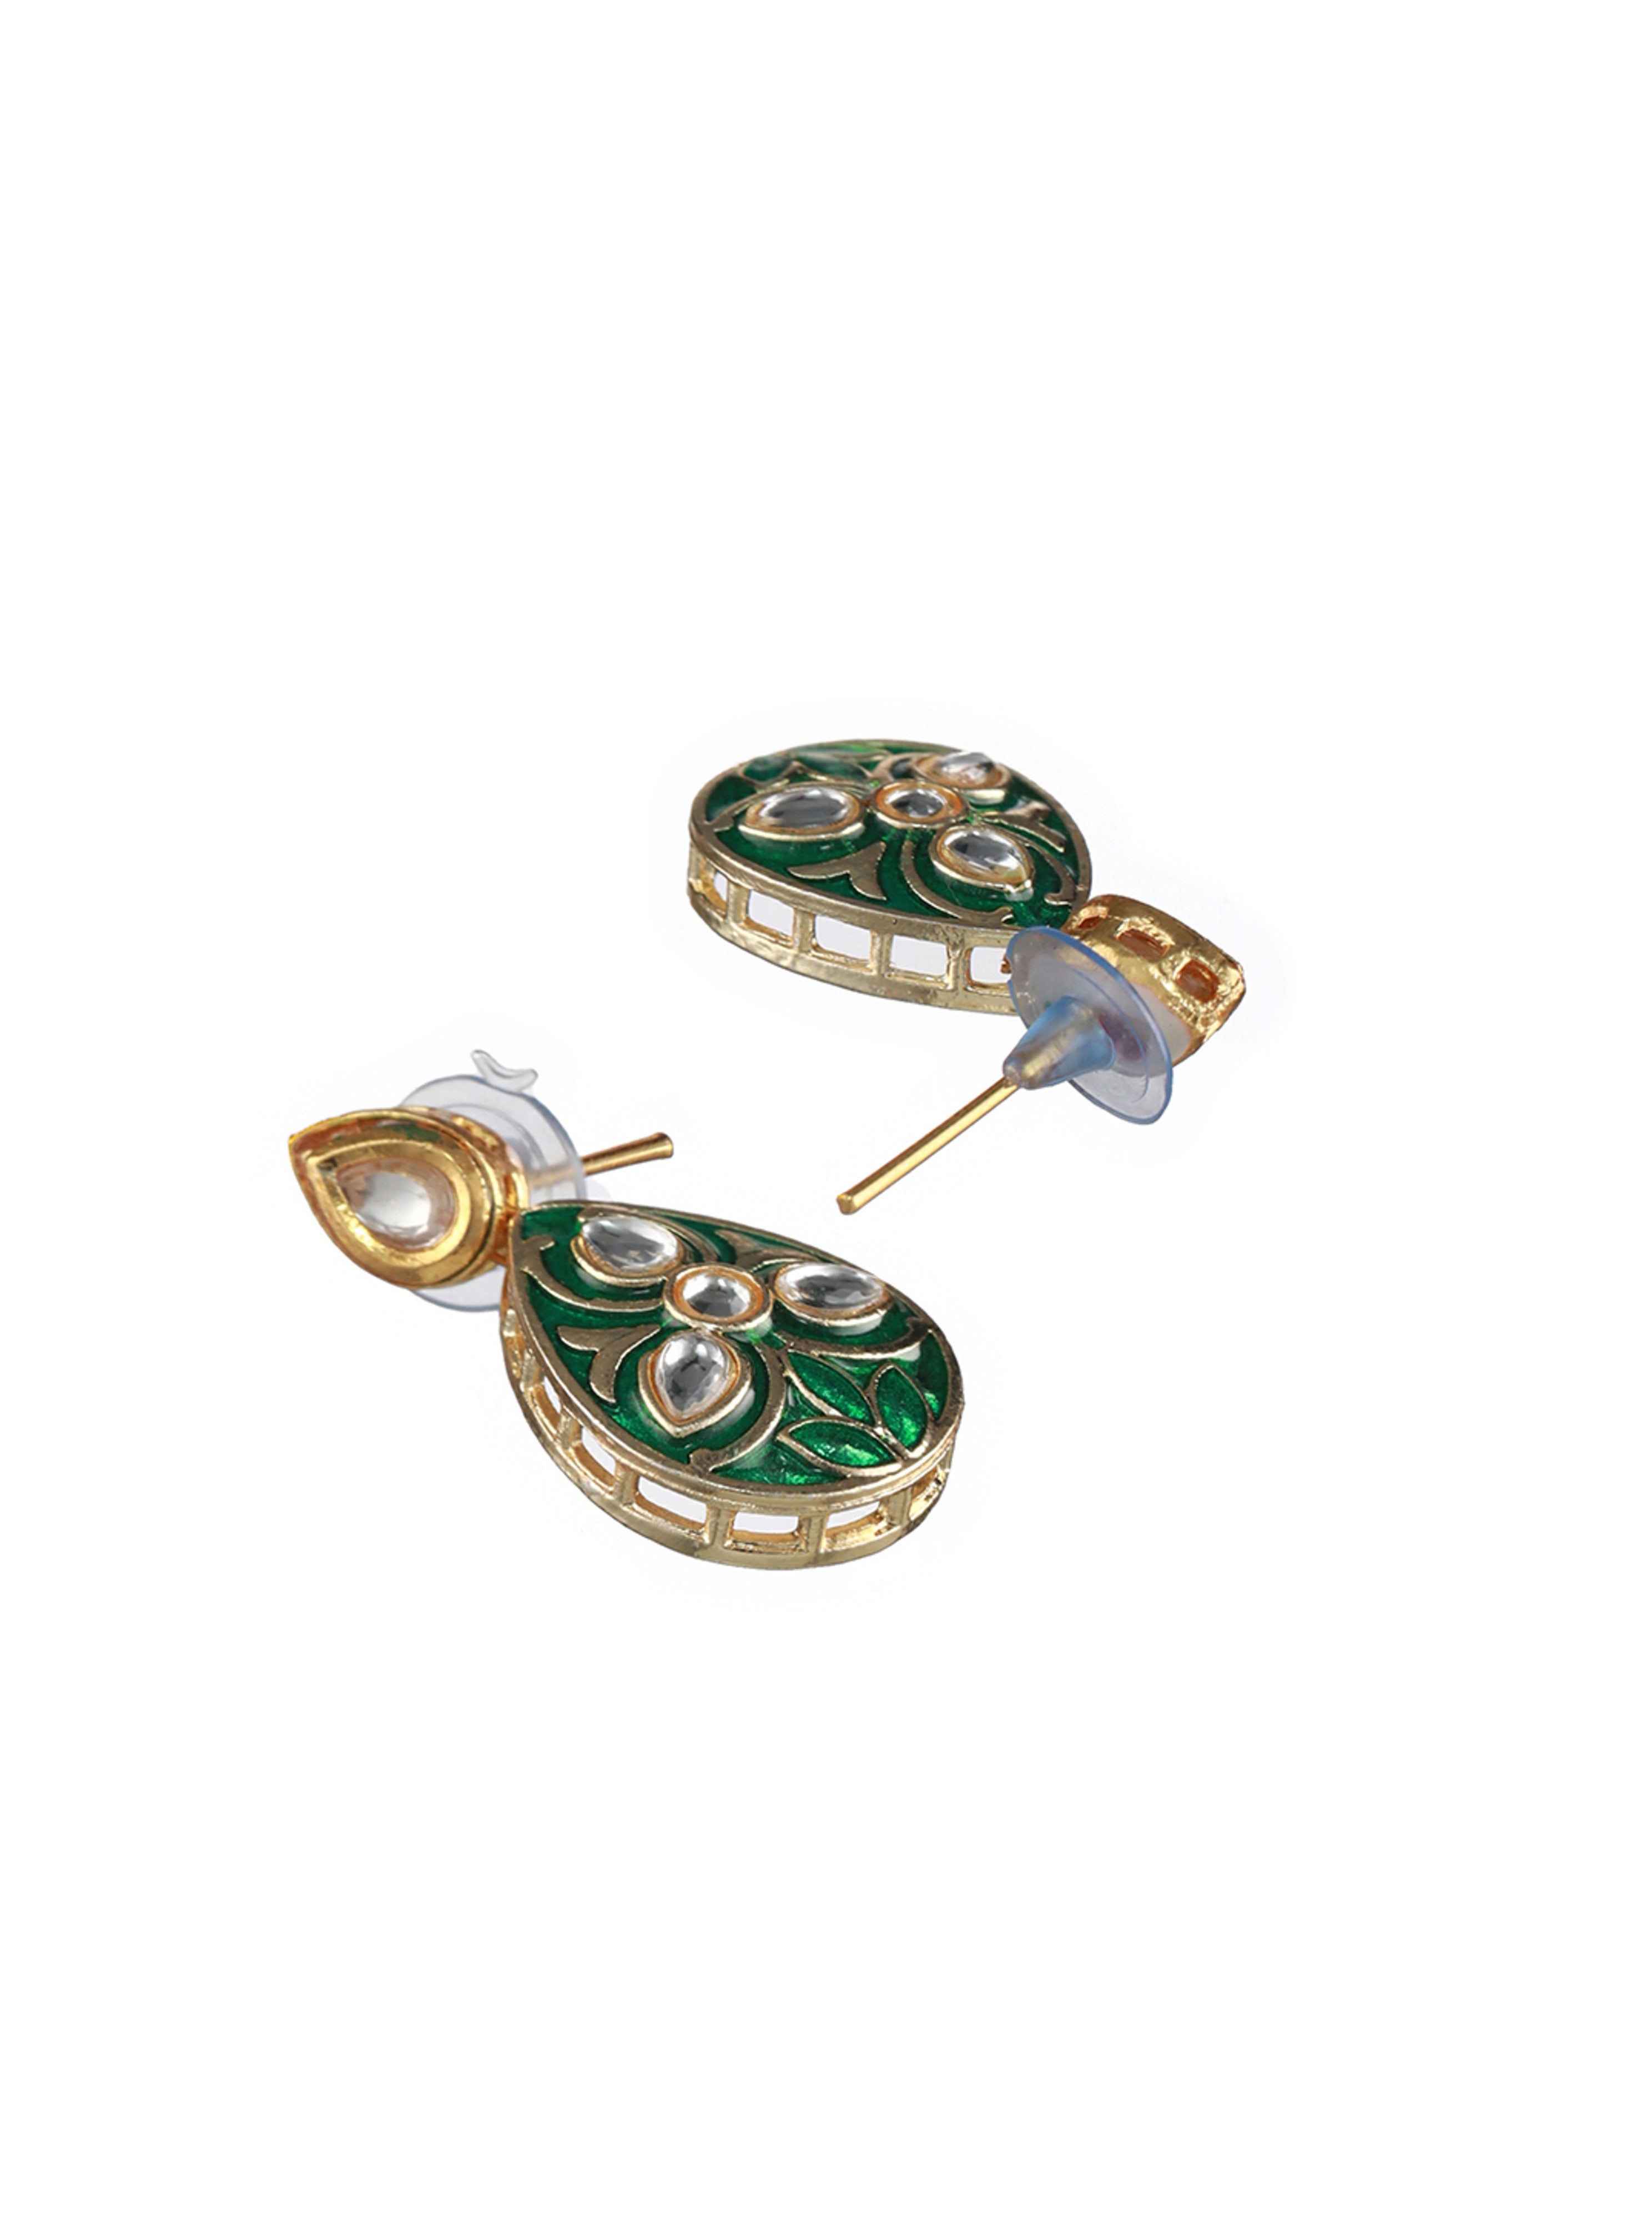 Green & Gold-Plated Enamelledand kundan studded Handcrafted Jewellery Set